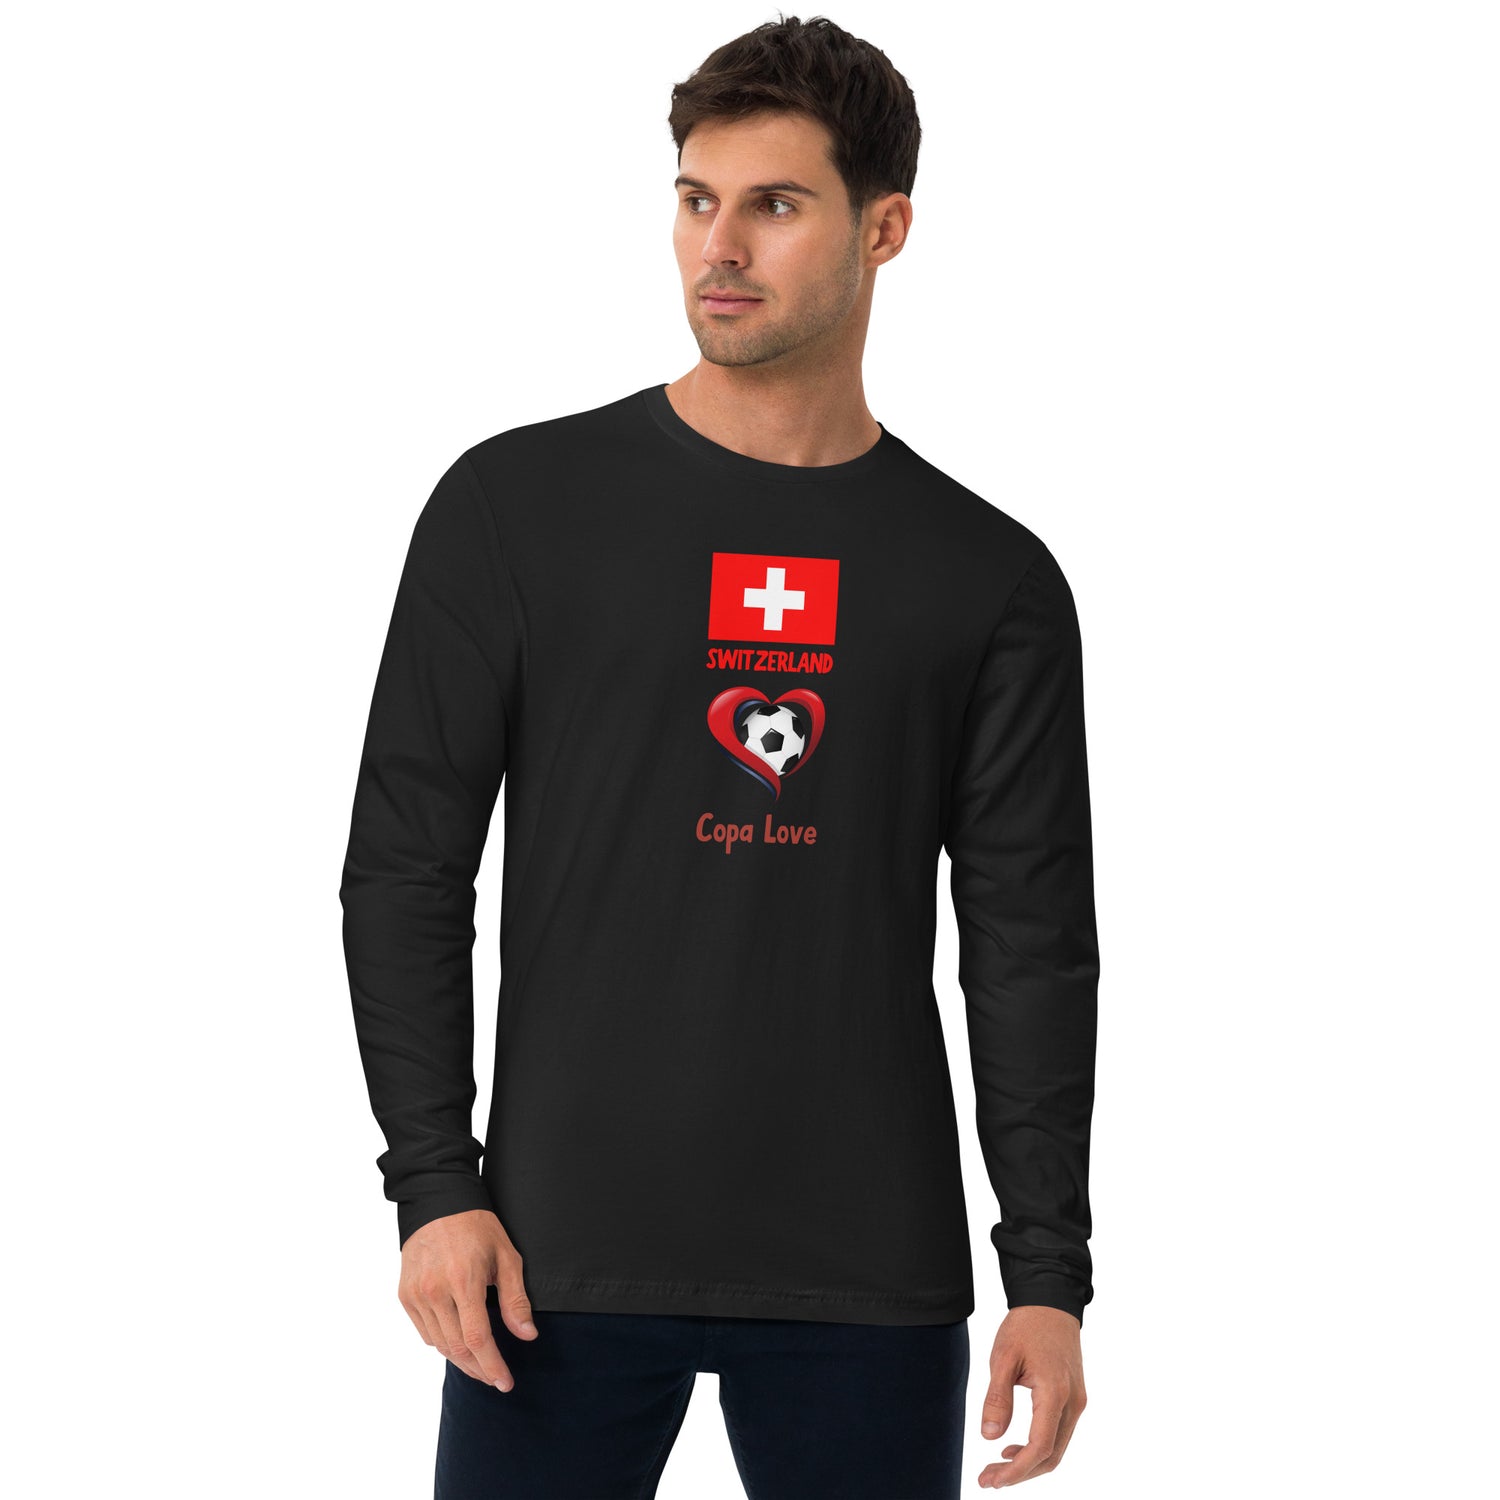 SWITZERLAND - Copa Love Premium Long Sleeve Fitted Crew Shirt